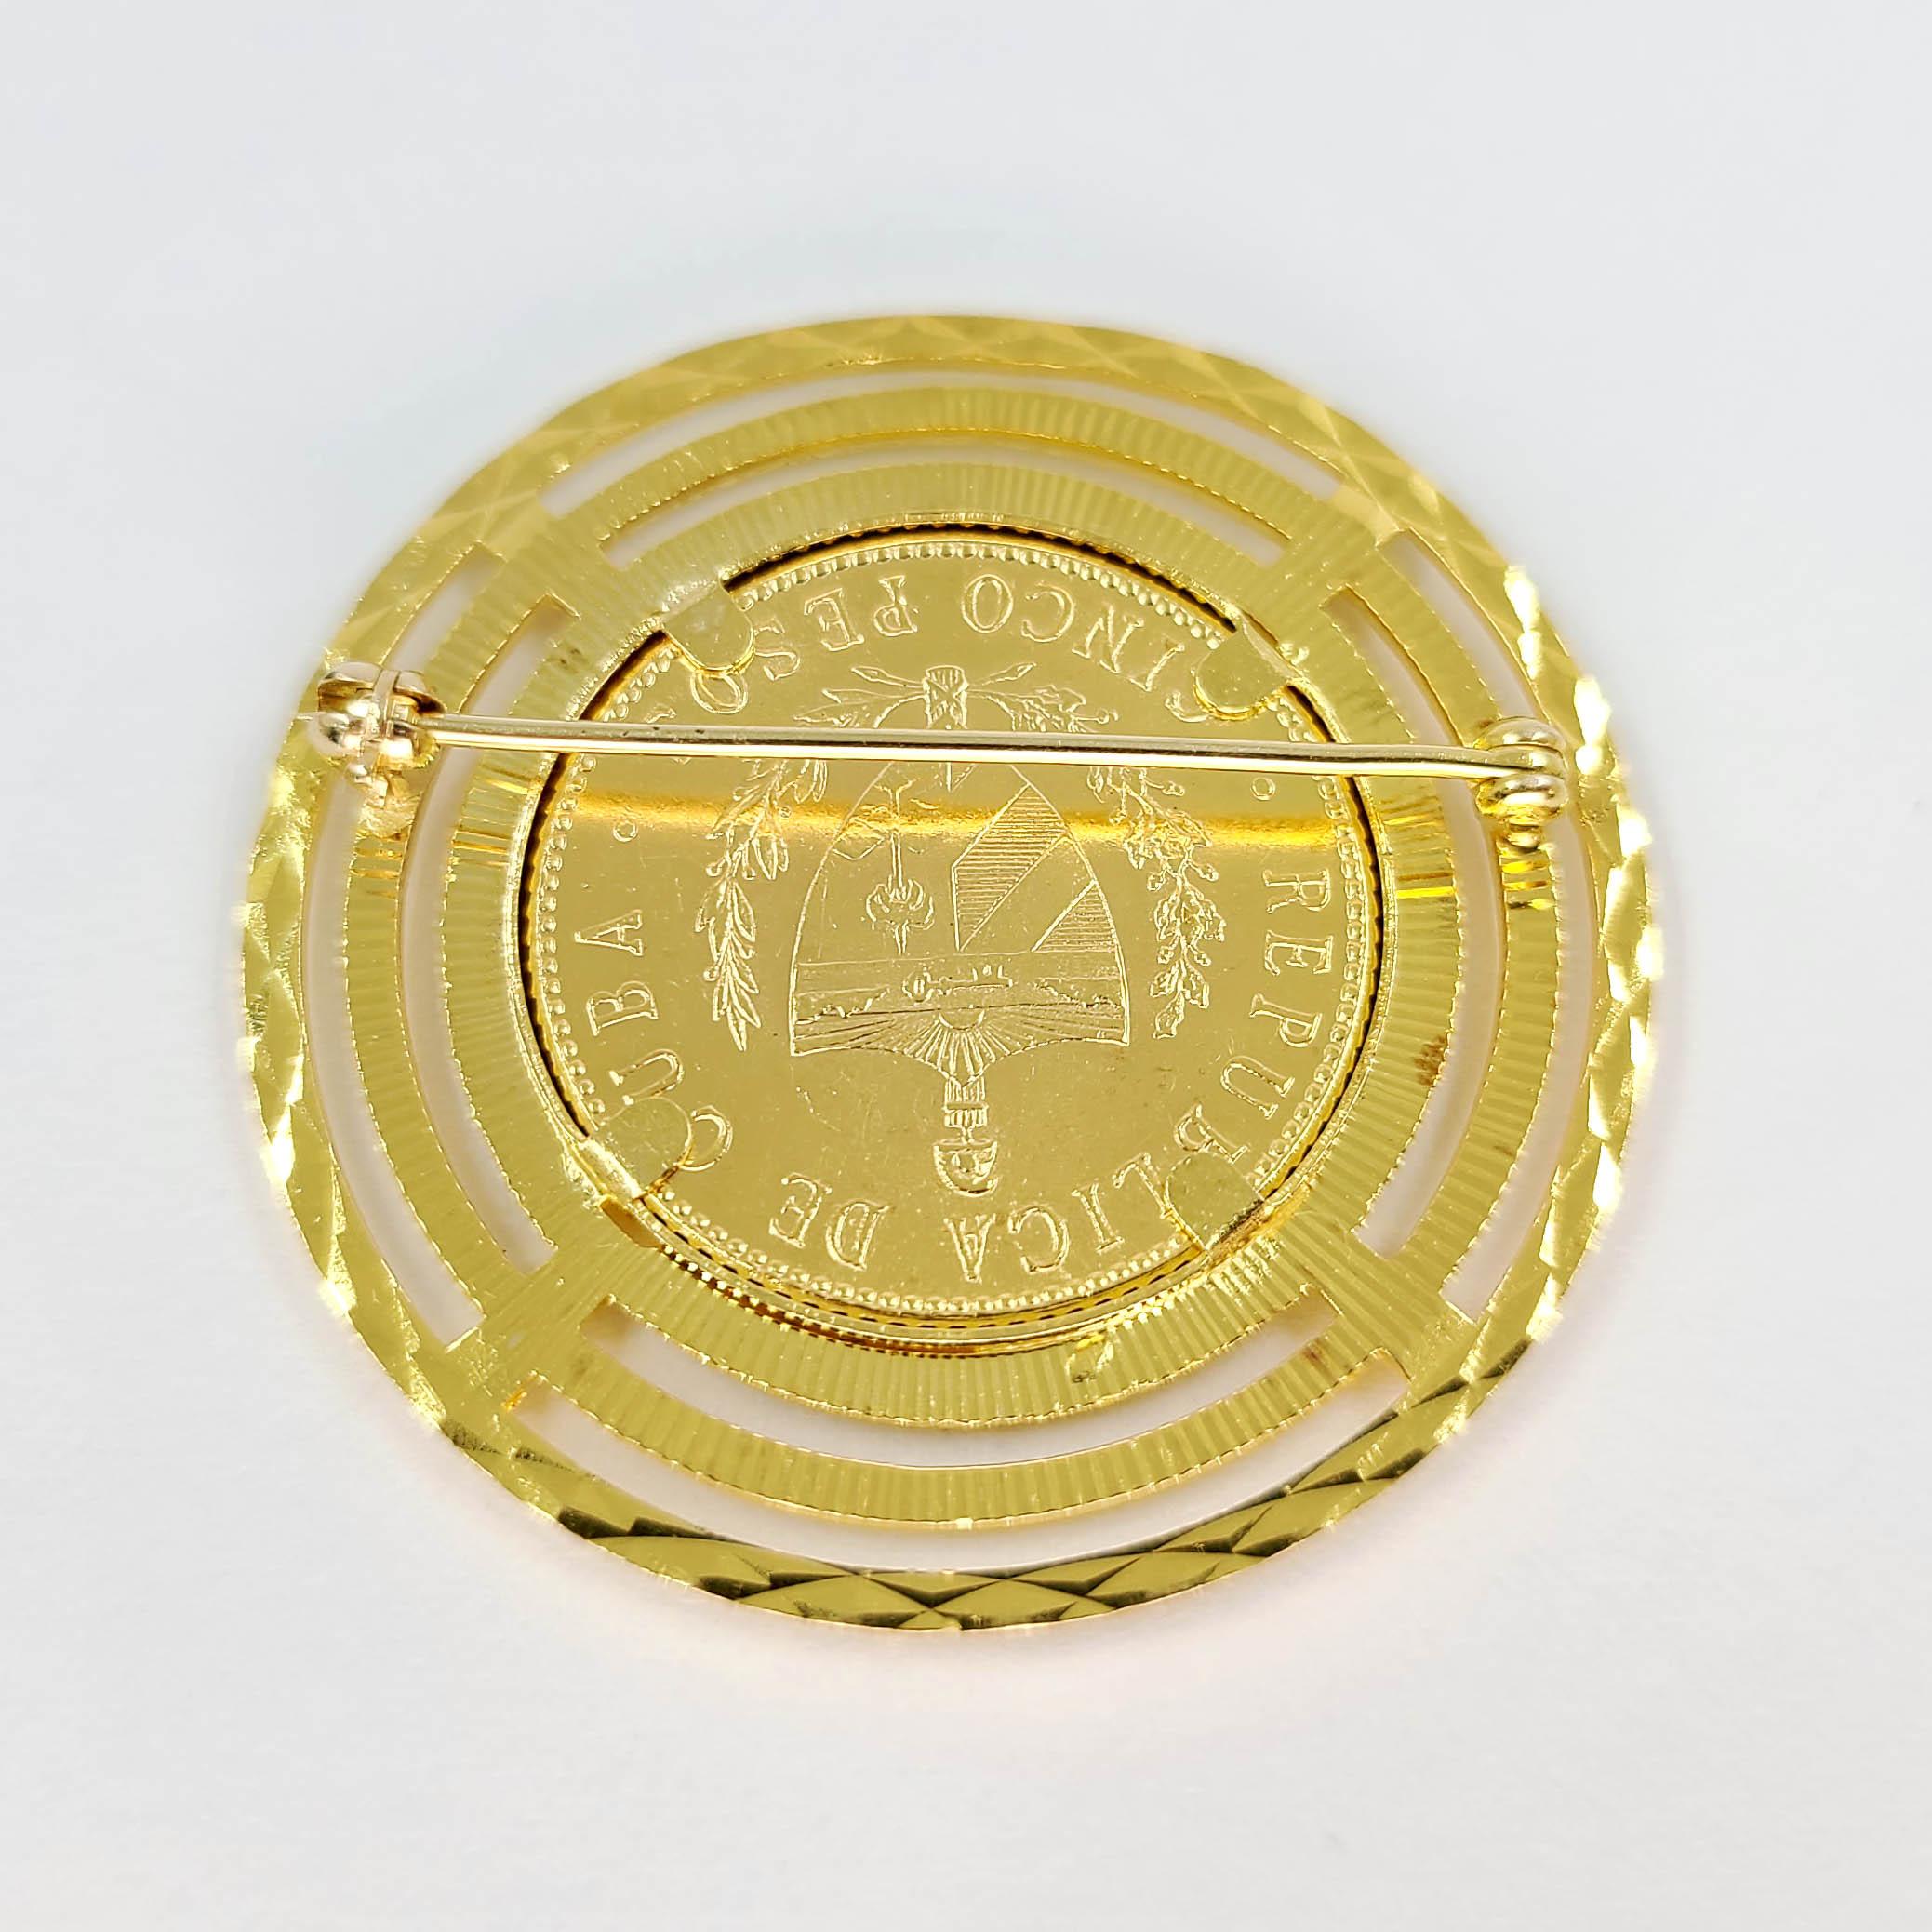 18 Karat Yellow Gold Frame & Pin Surrounding a 22 Karat Yellow Gold Cuban Cinco Pesos Coin From 1916. Finished Weight is 15.0 Grams.